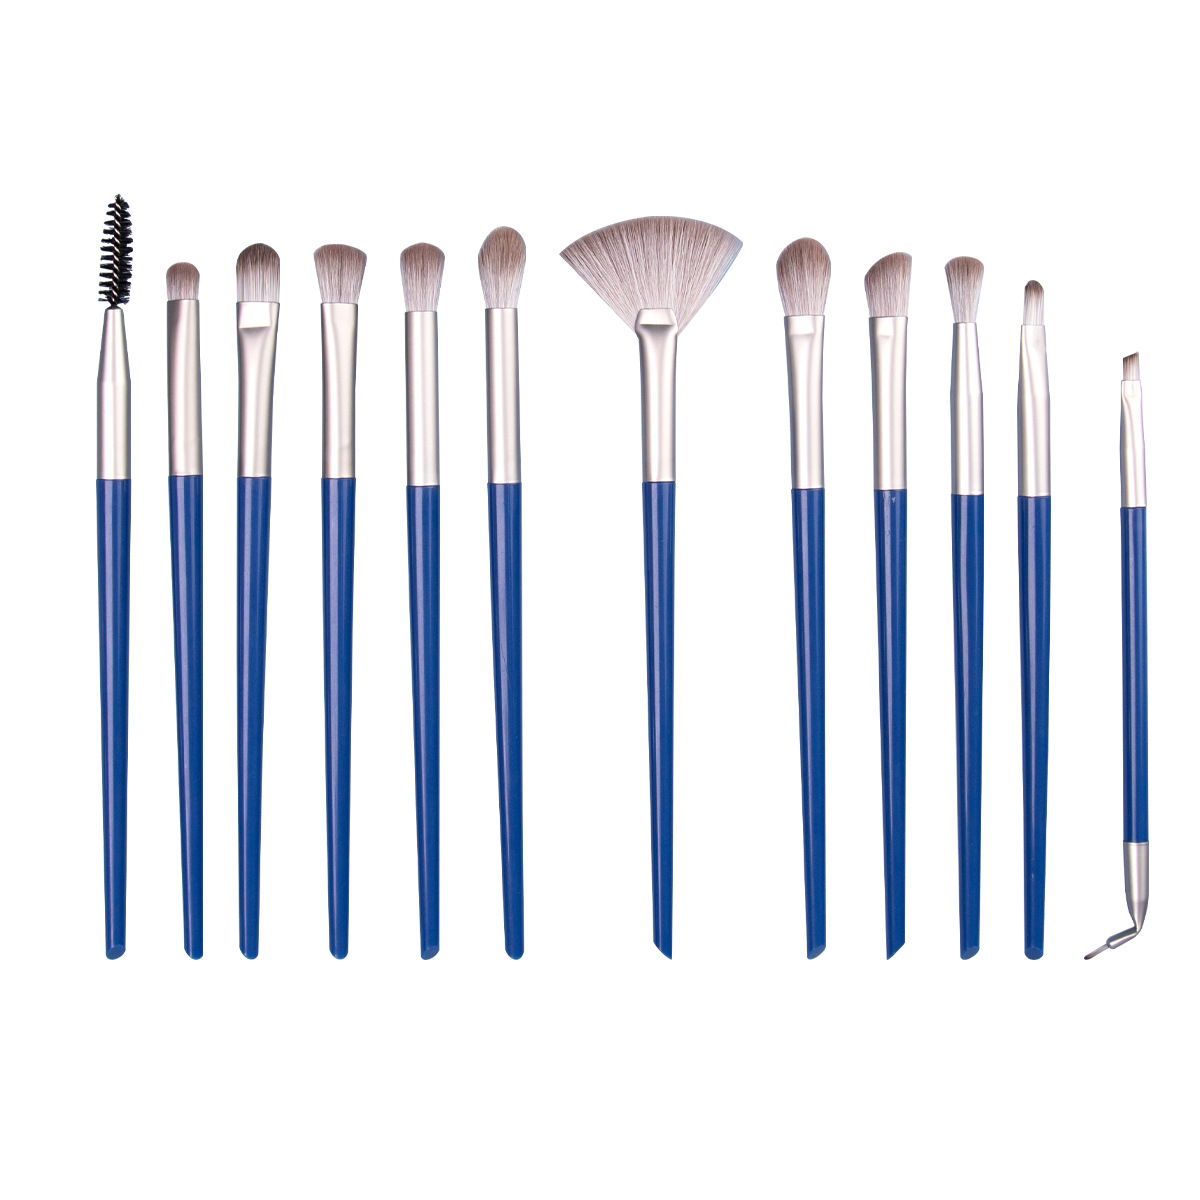 Customize Professional Eye Makeup Brush Set 12Pcs Beauty Tools for Eyeshadow Blending Eyebrow Eyeliner